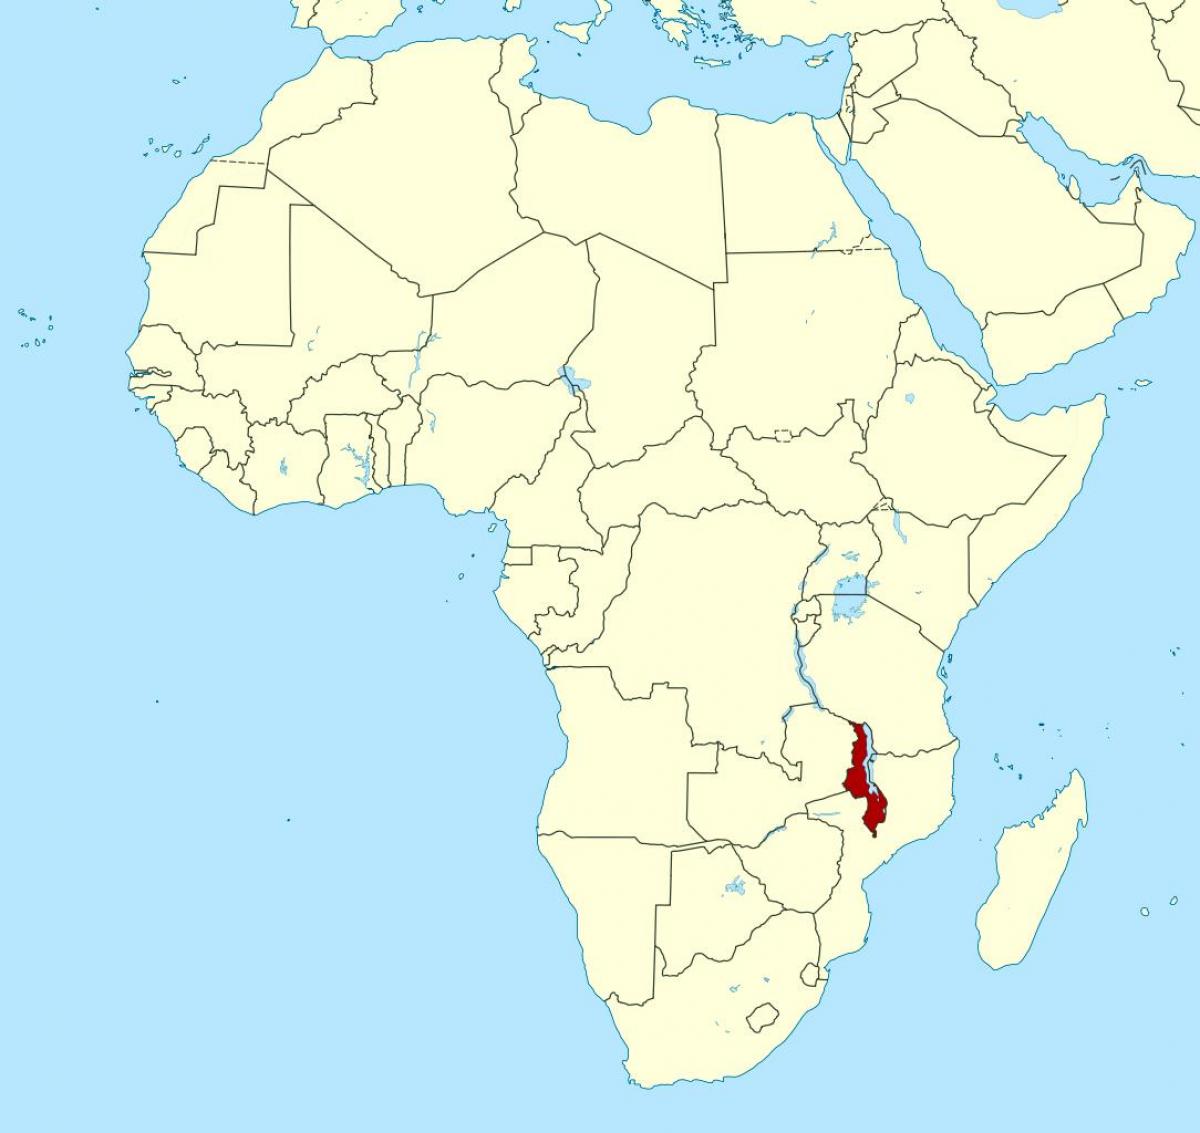 Malawi localização no mapa